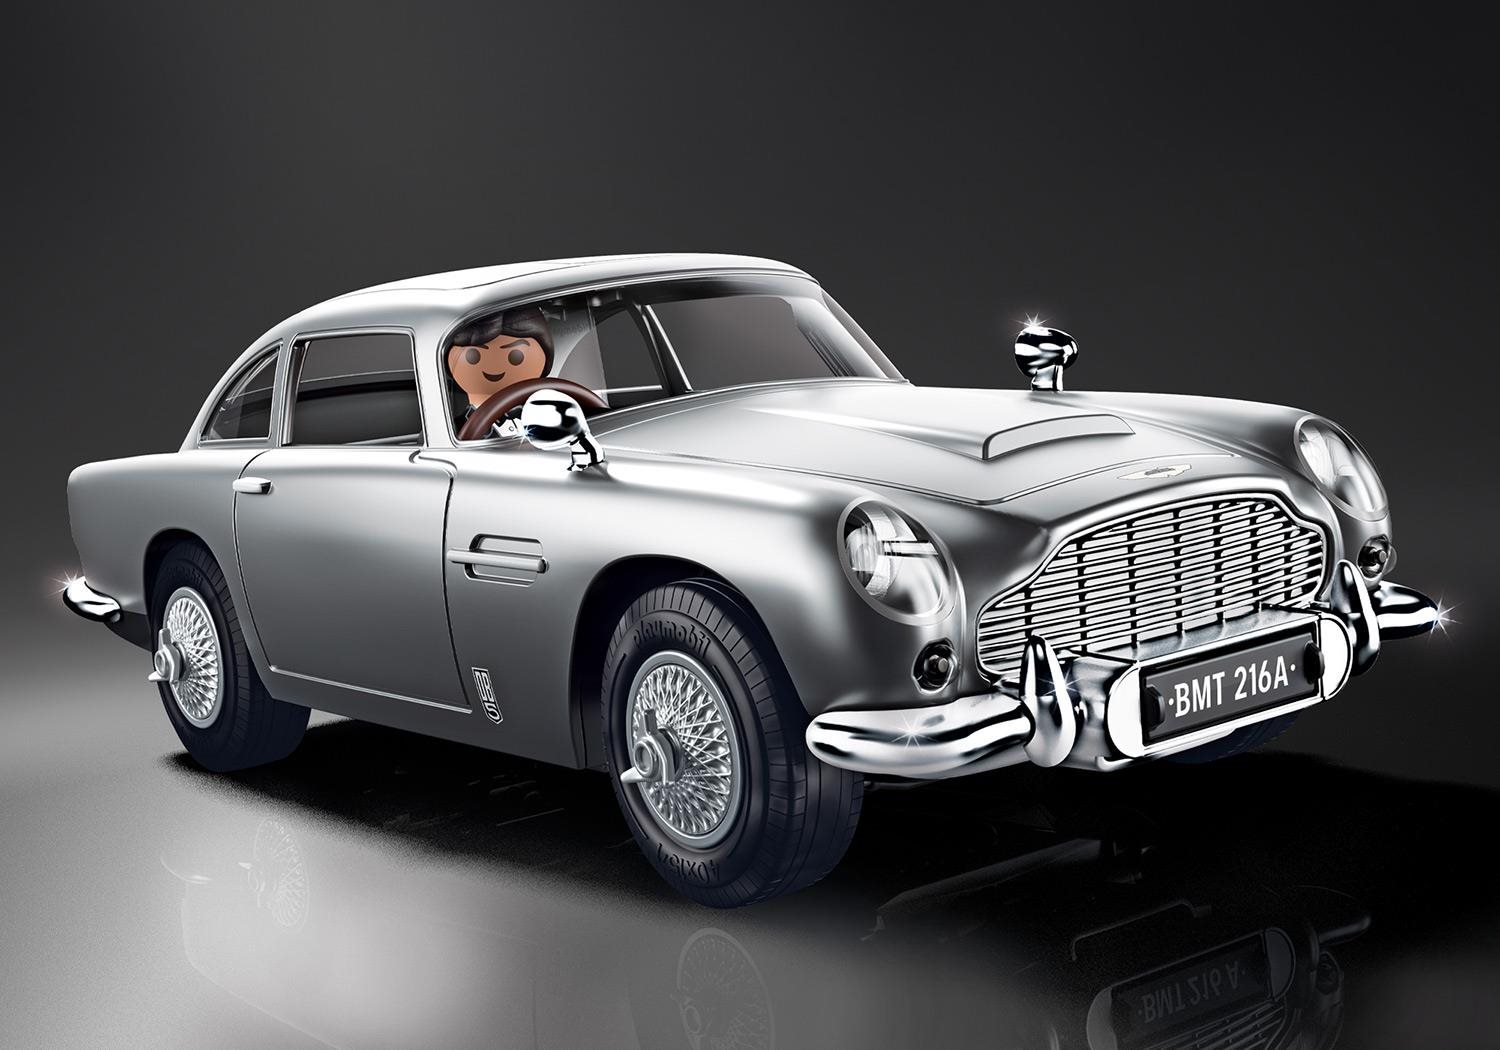 Building Set Playmobil 70578 James Bond Aston Martin DB5 - Goldfinger Edition Lifestyle